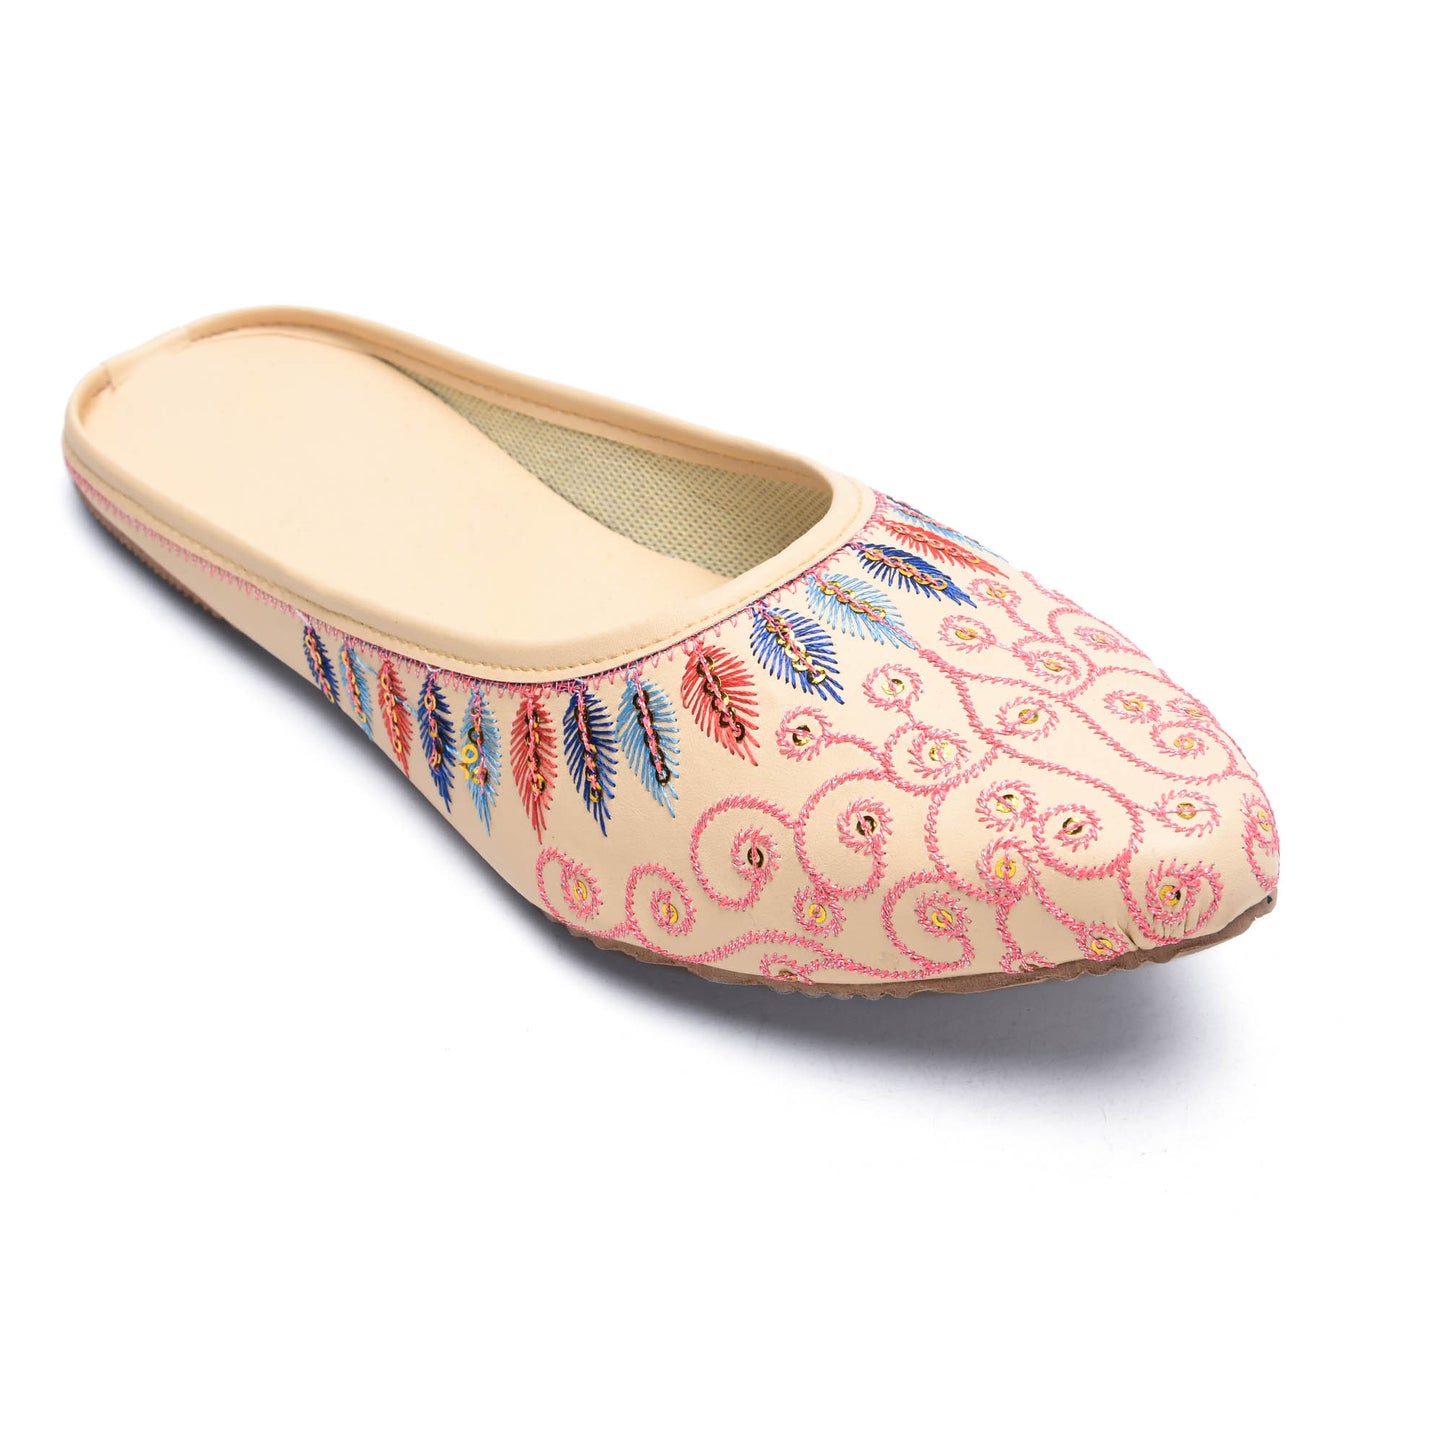 Sukriti Ethnic Traditional Handmade Stylish Latest Embroidery Jaipuri Cream Jutti | Nagra | Mojari | Shoes for Women & Girls